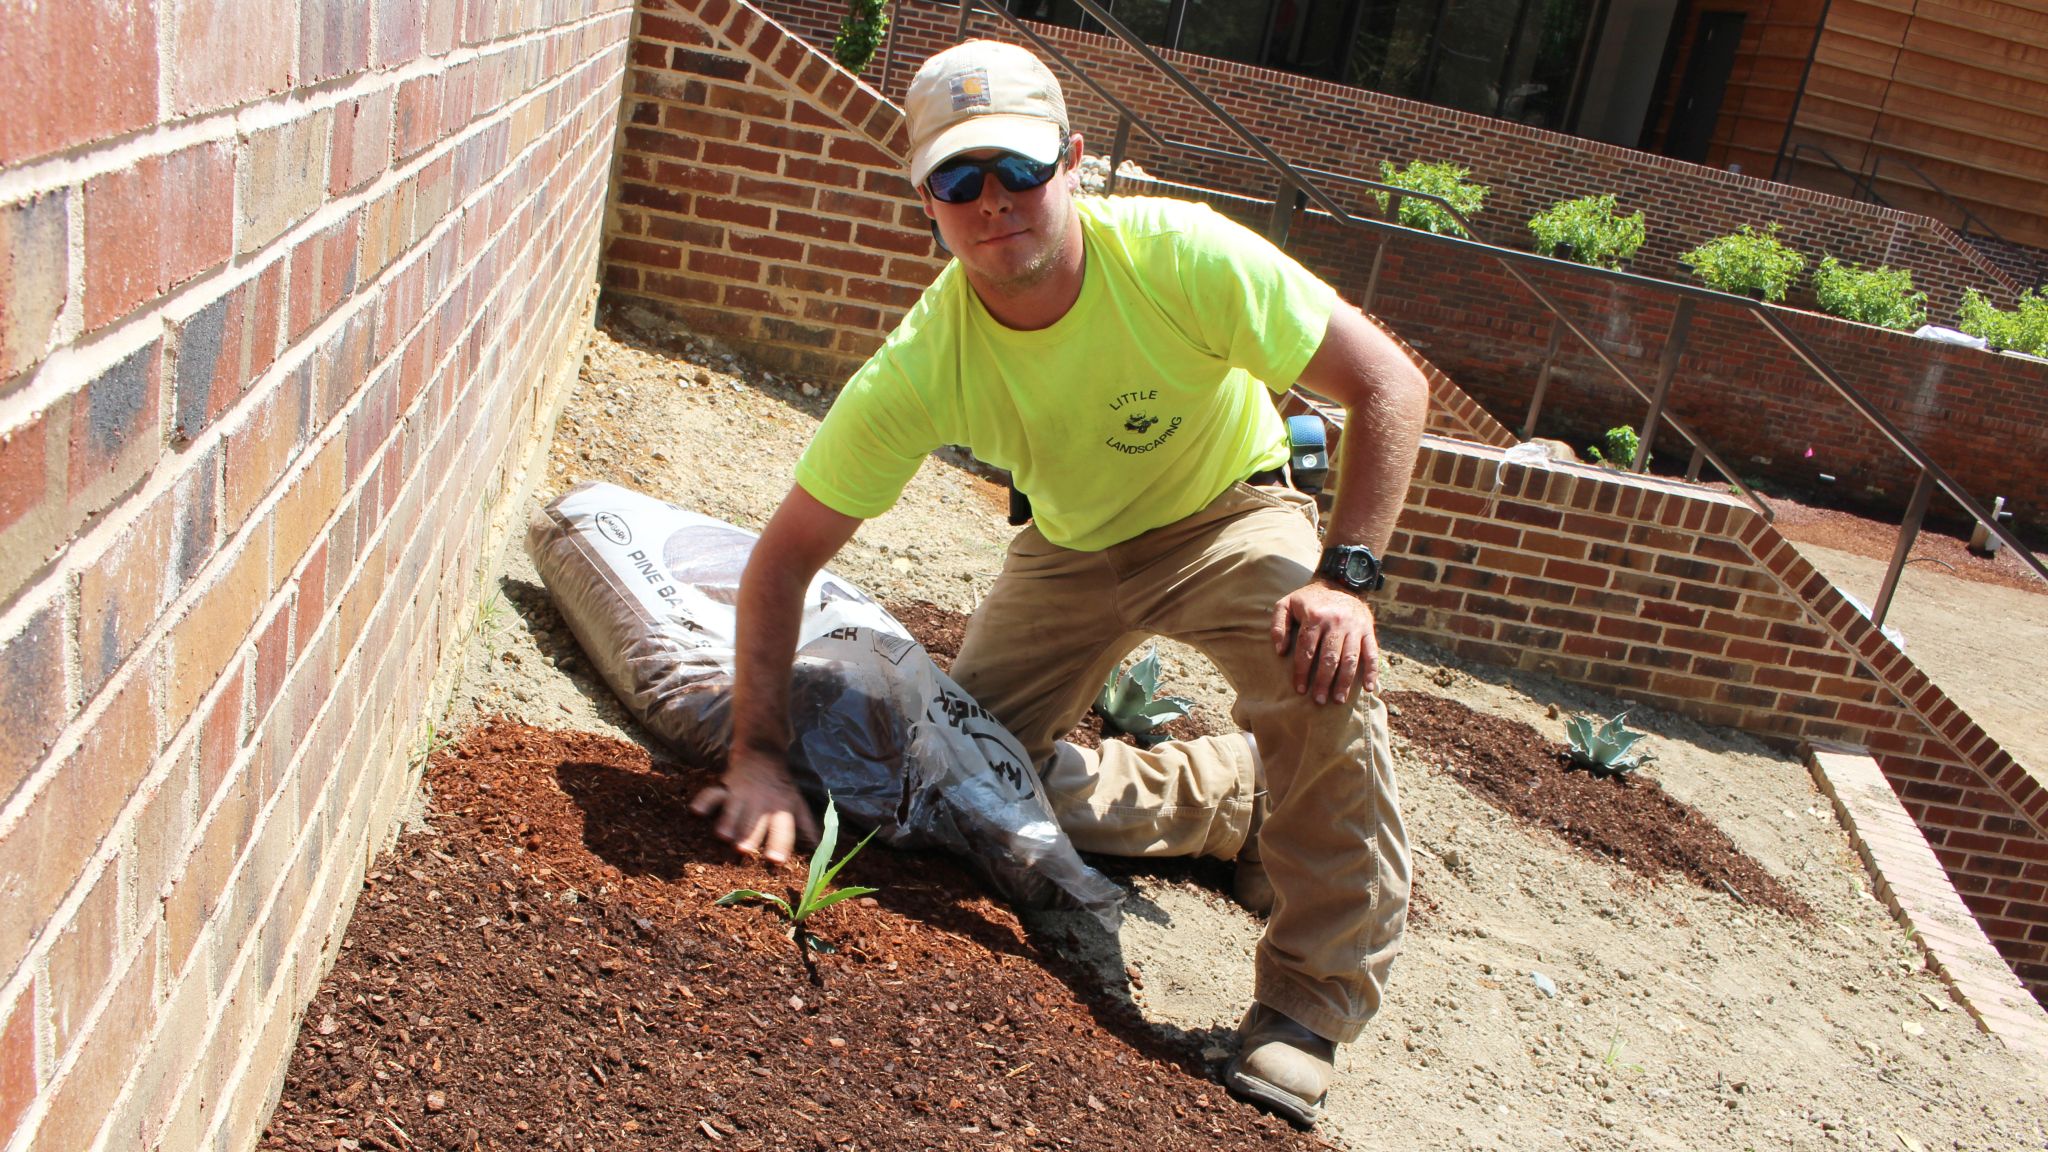 Student near brick walls spreading pine bark mulch around a plant.